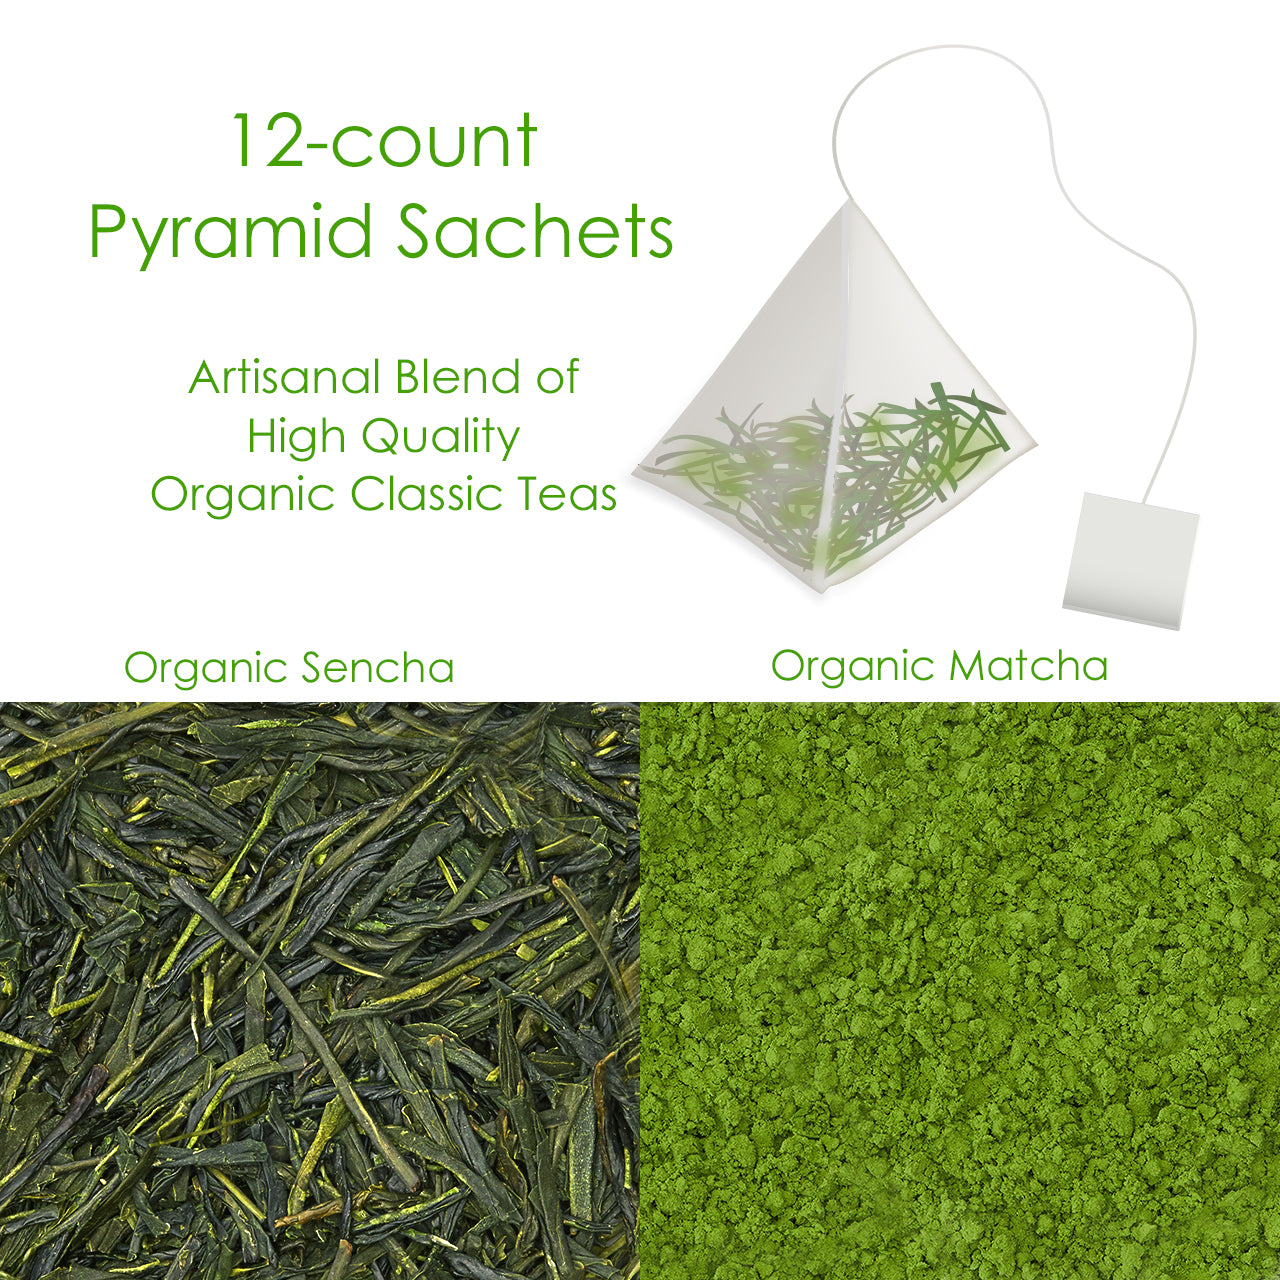 Organic Matcha Sencha Tea Bags